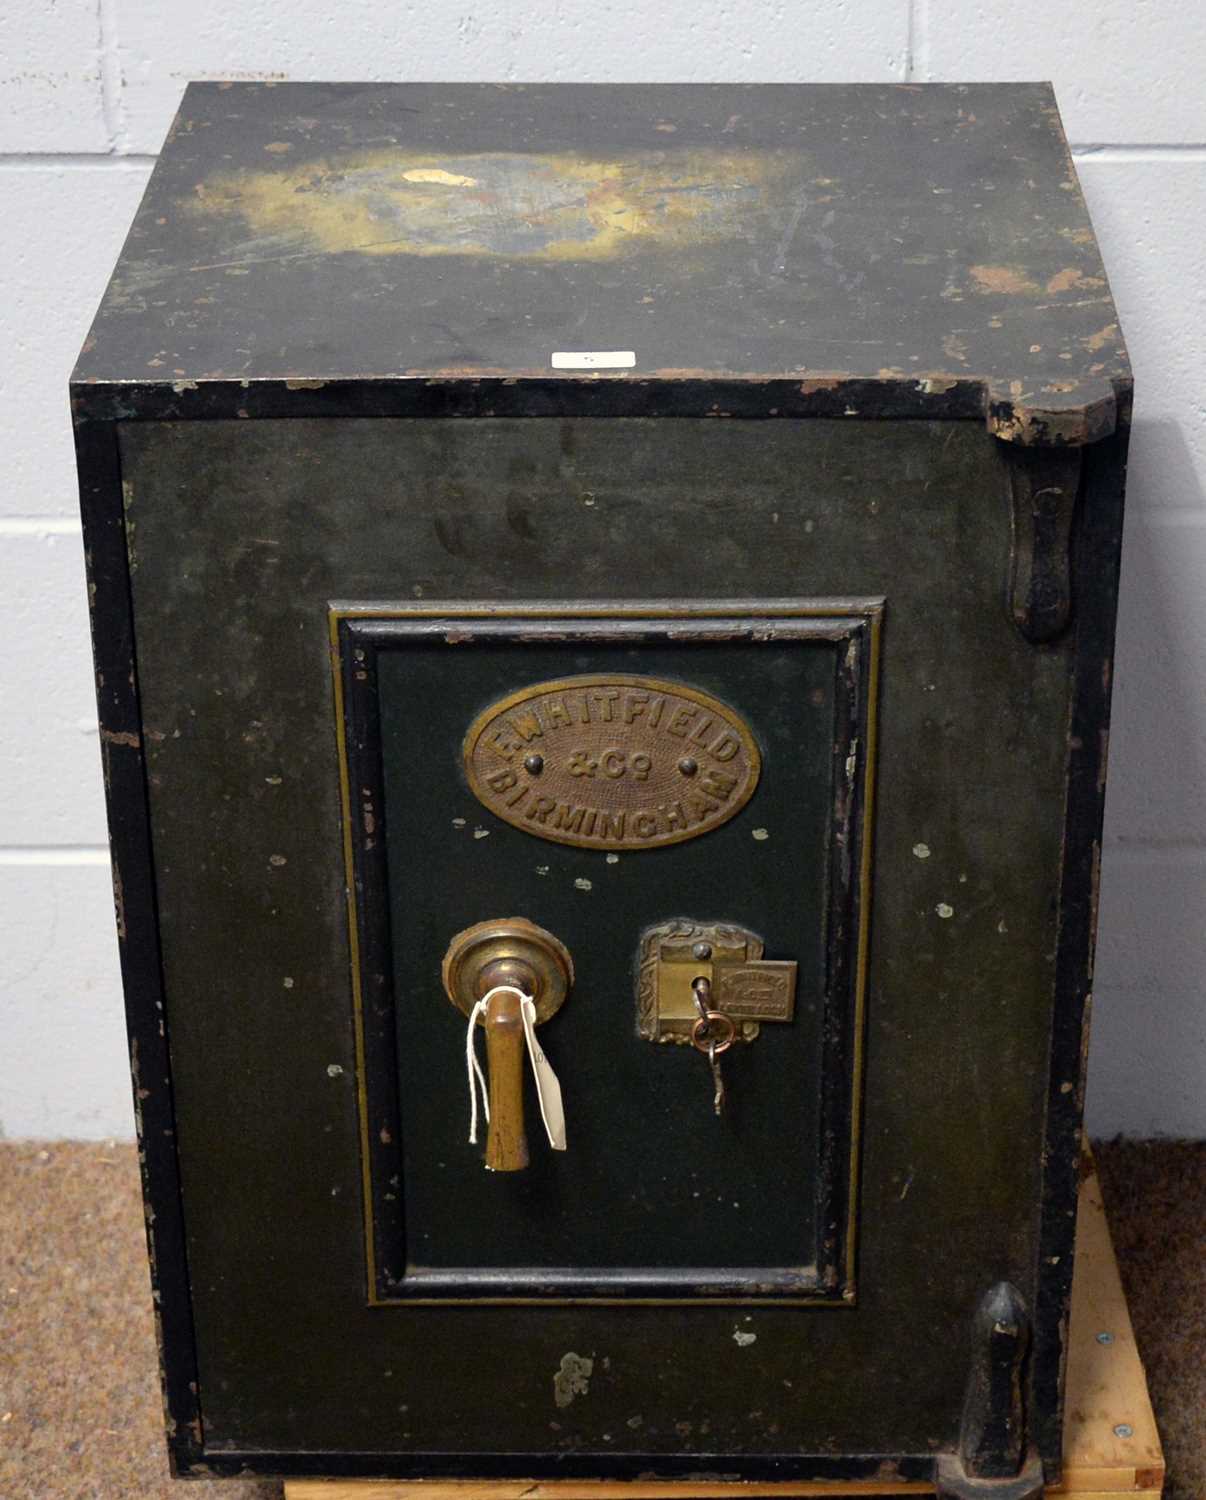 F. Wickfield & Co., Birmingham: a vintage cast metal safe.